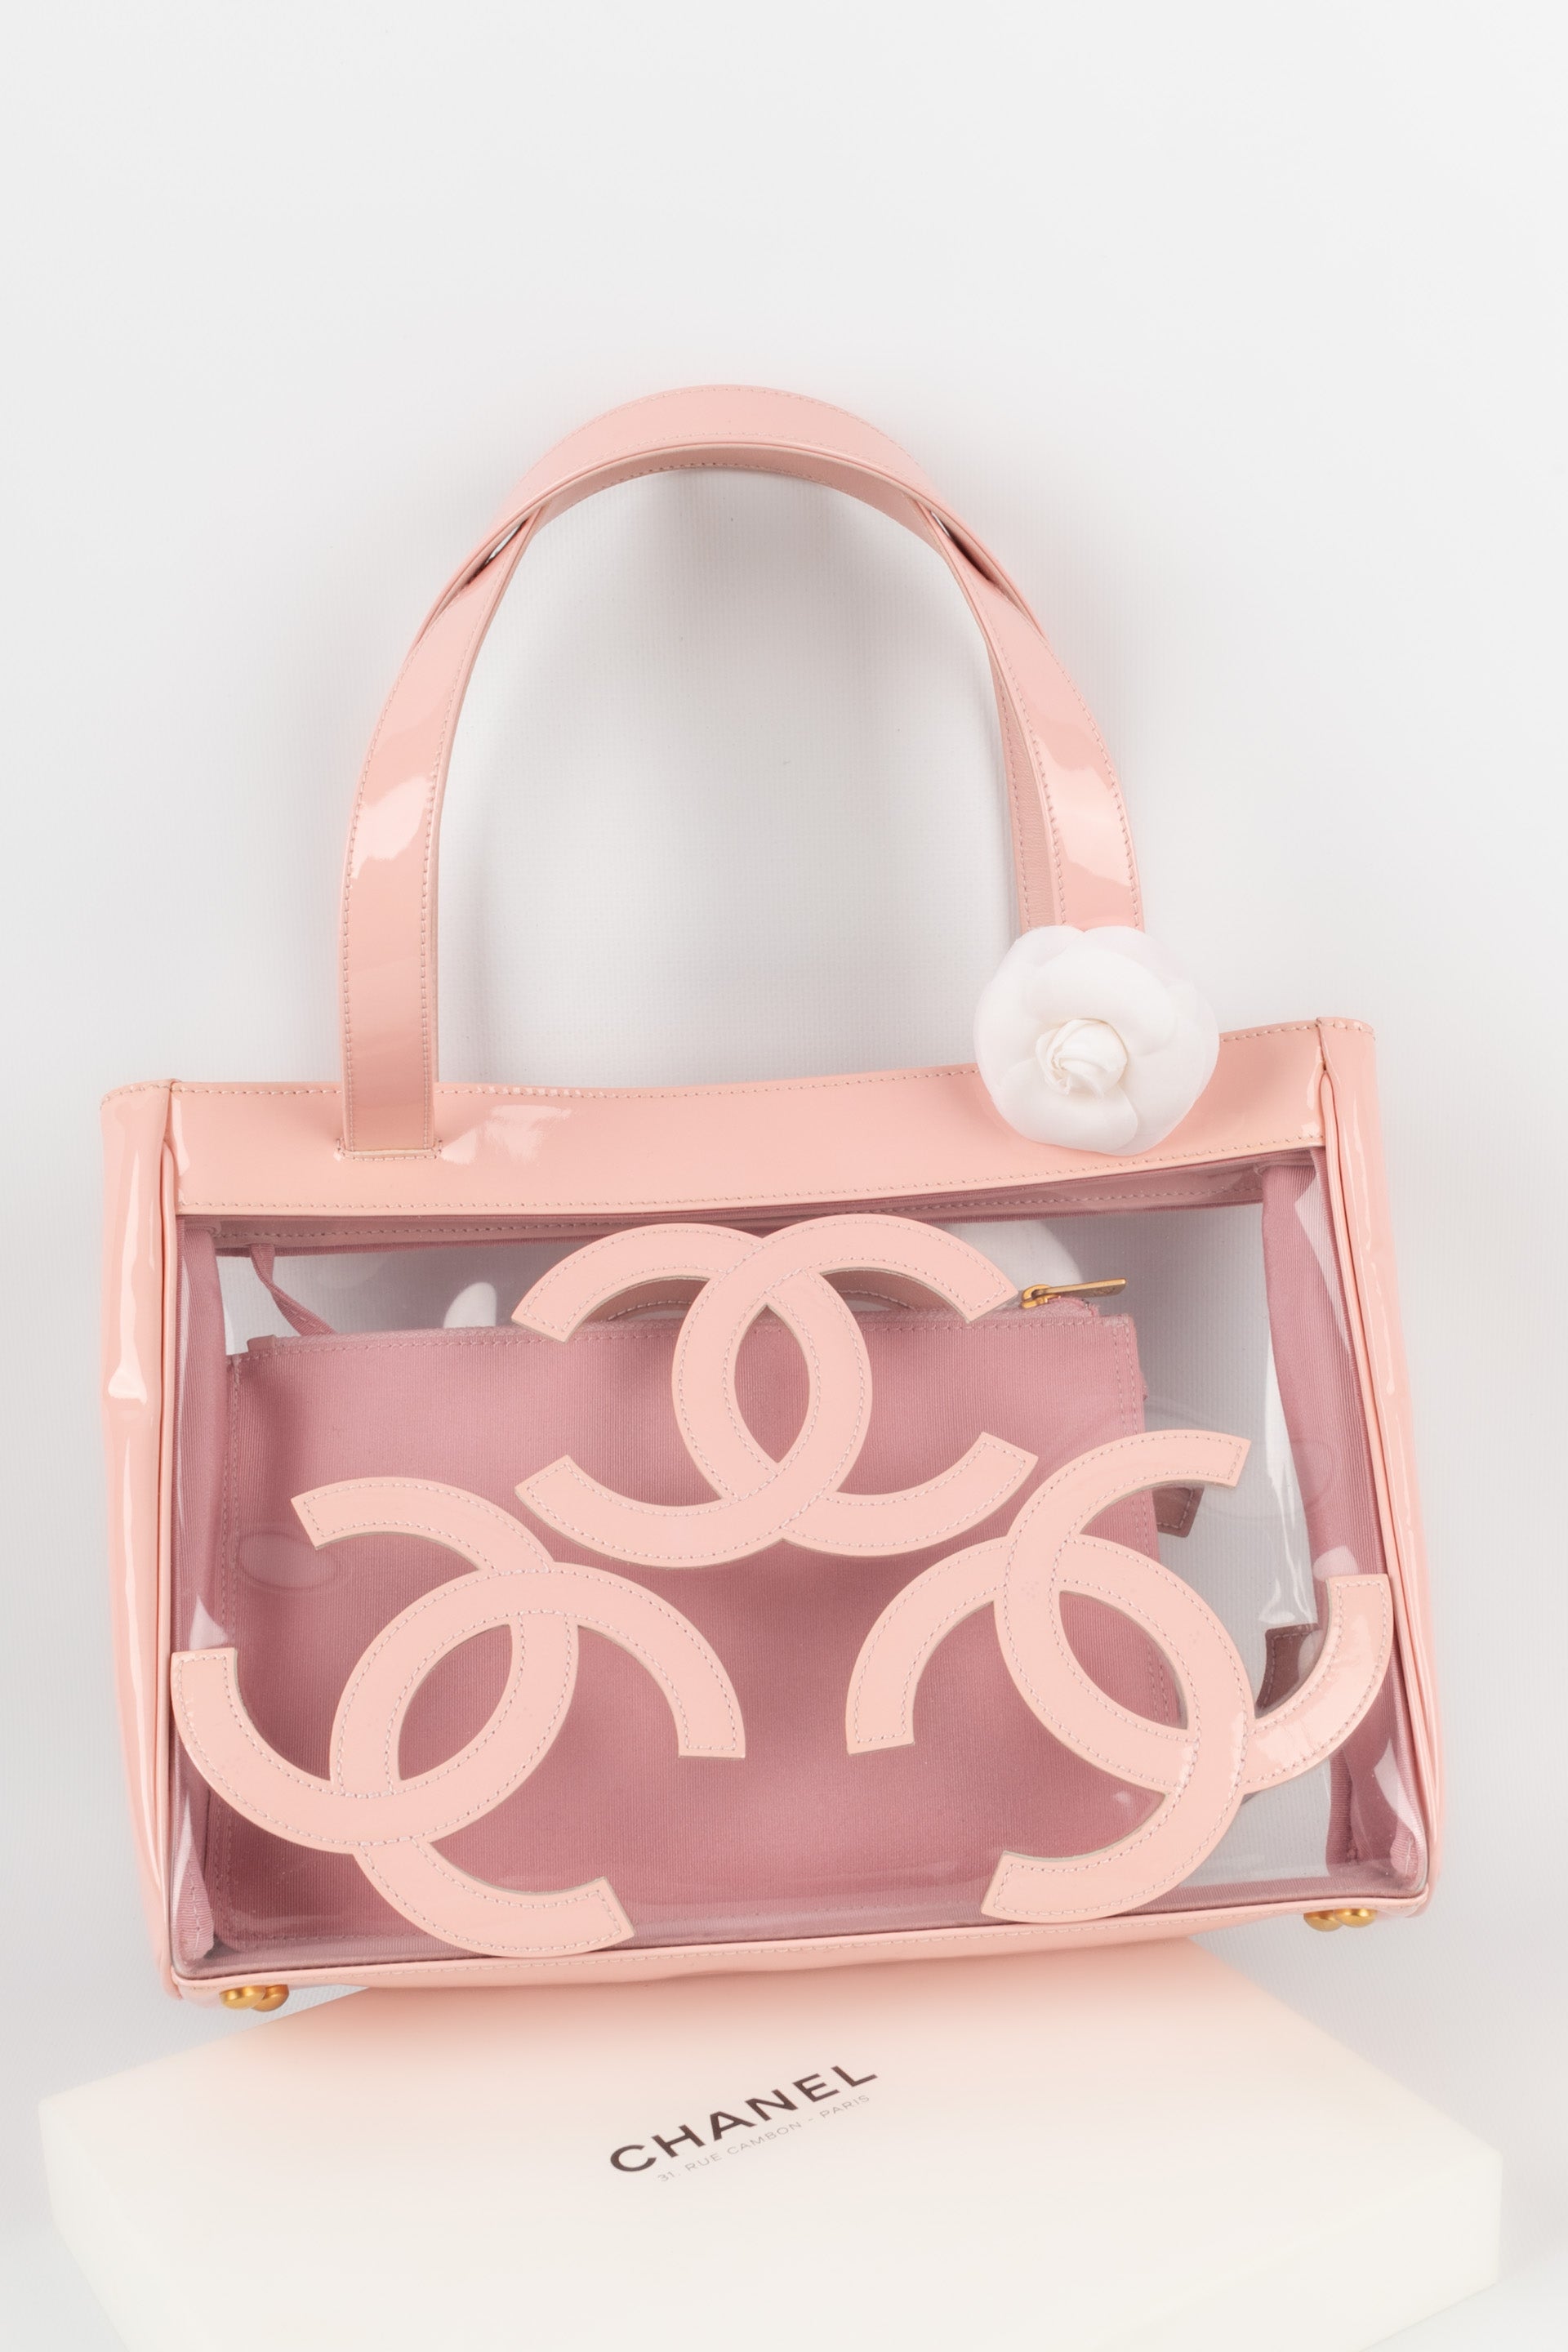 Chanel pink bag 2004/2005